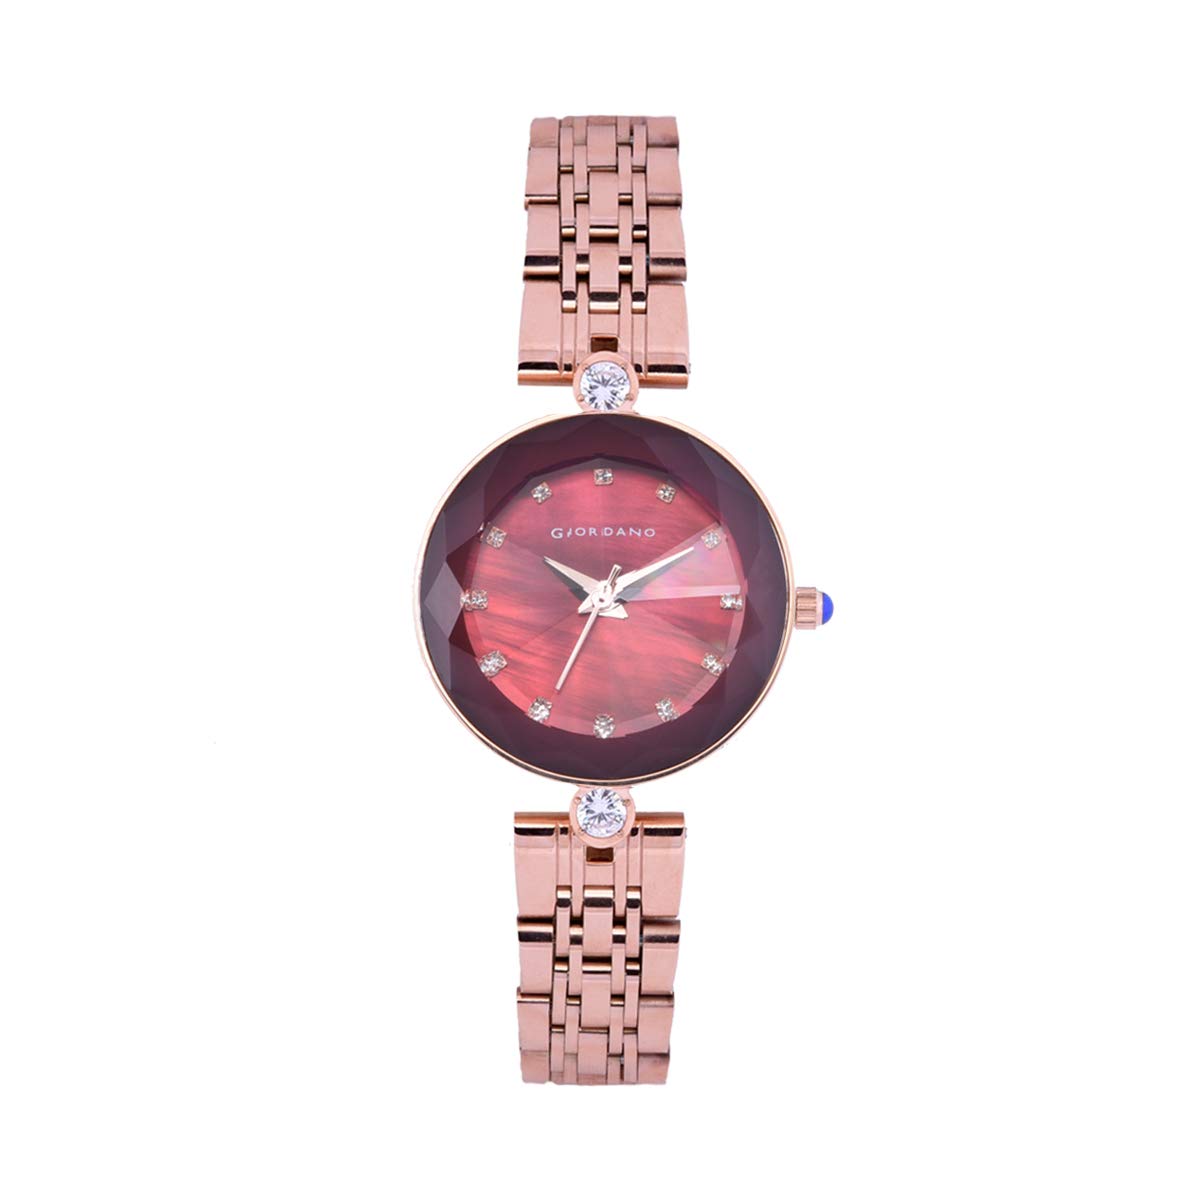 Giordano Eleganza Collection Round Analog Watch for Women, Diamond-Set with Metal Strap Ladies Water Resistant Wrist Watch - GZ-60014